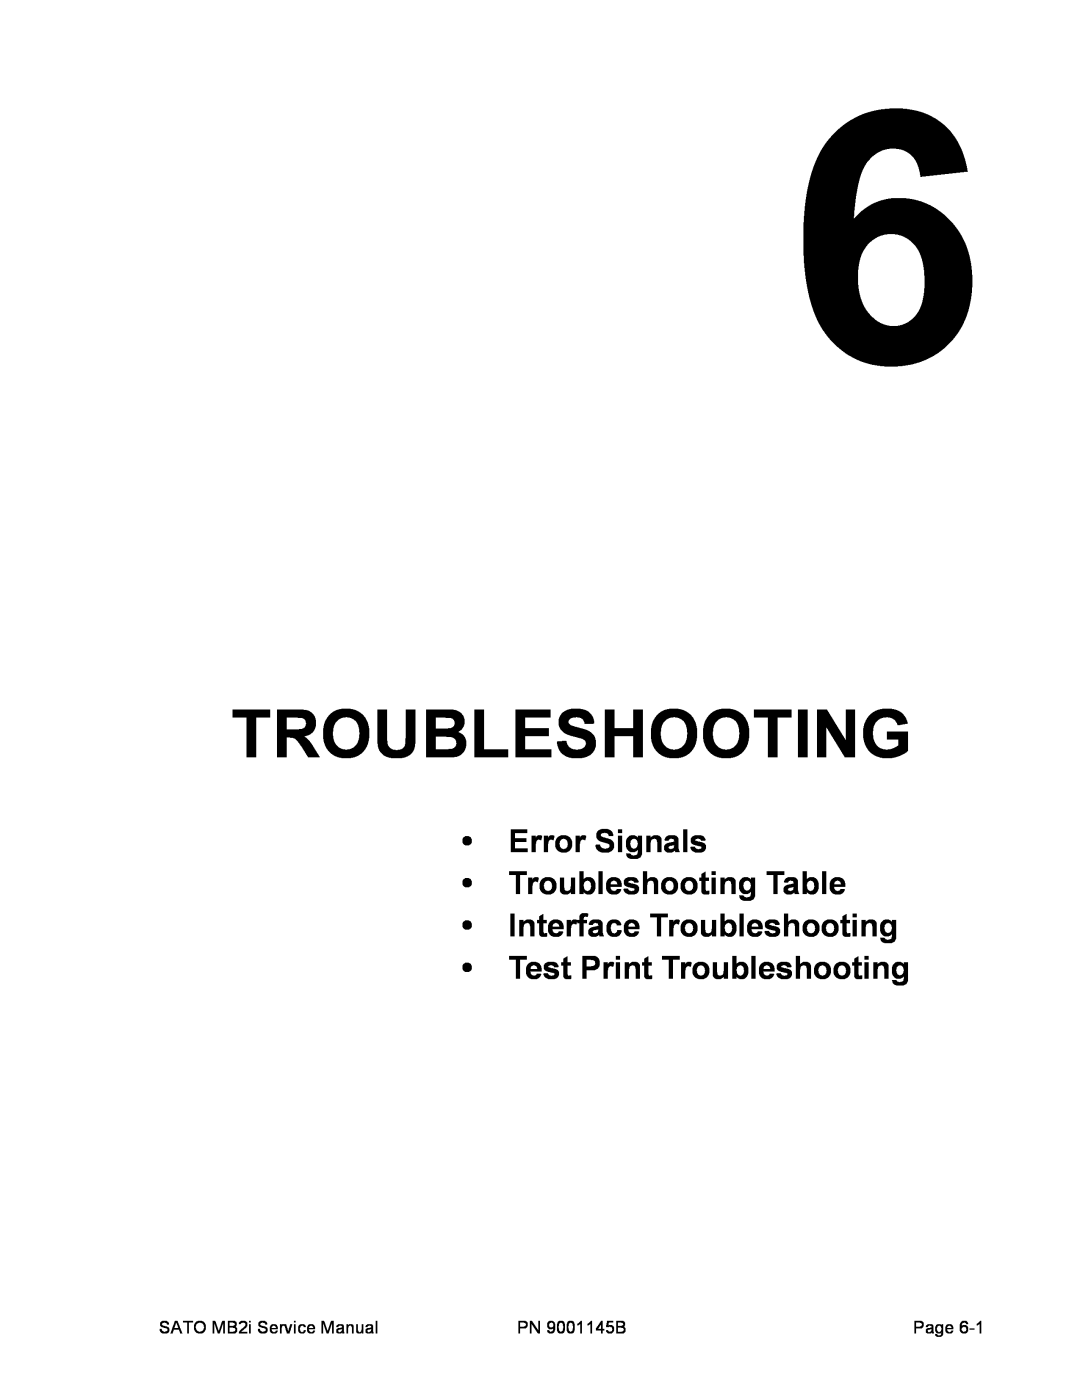 SATO 200i manual Error Signals Troubleshooting Table Interface Troubleshooting, Test Print Troubleshooting 